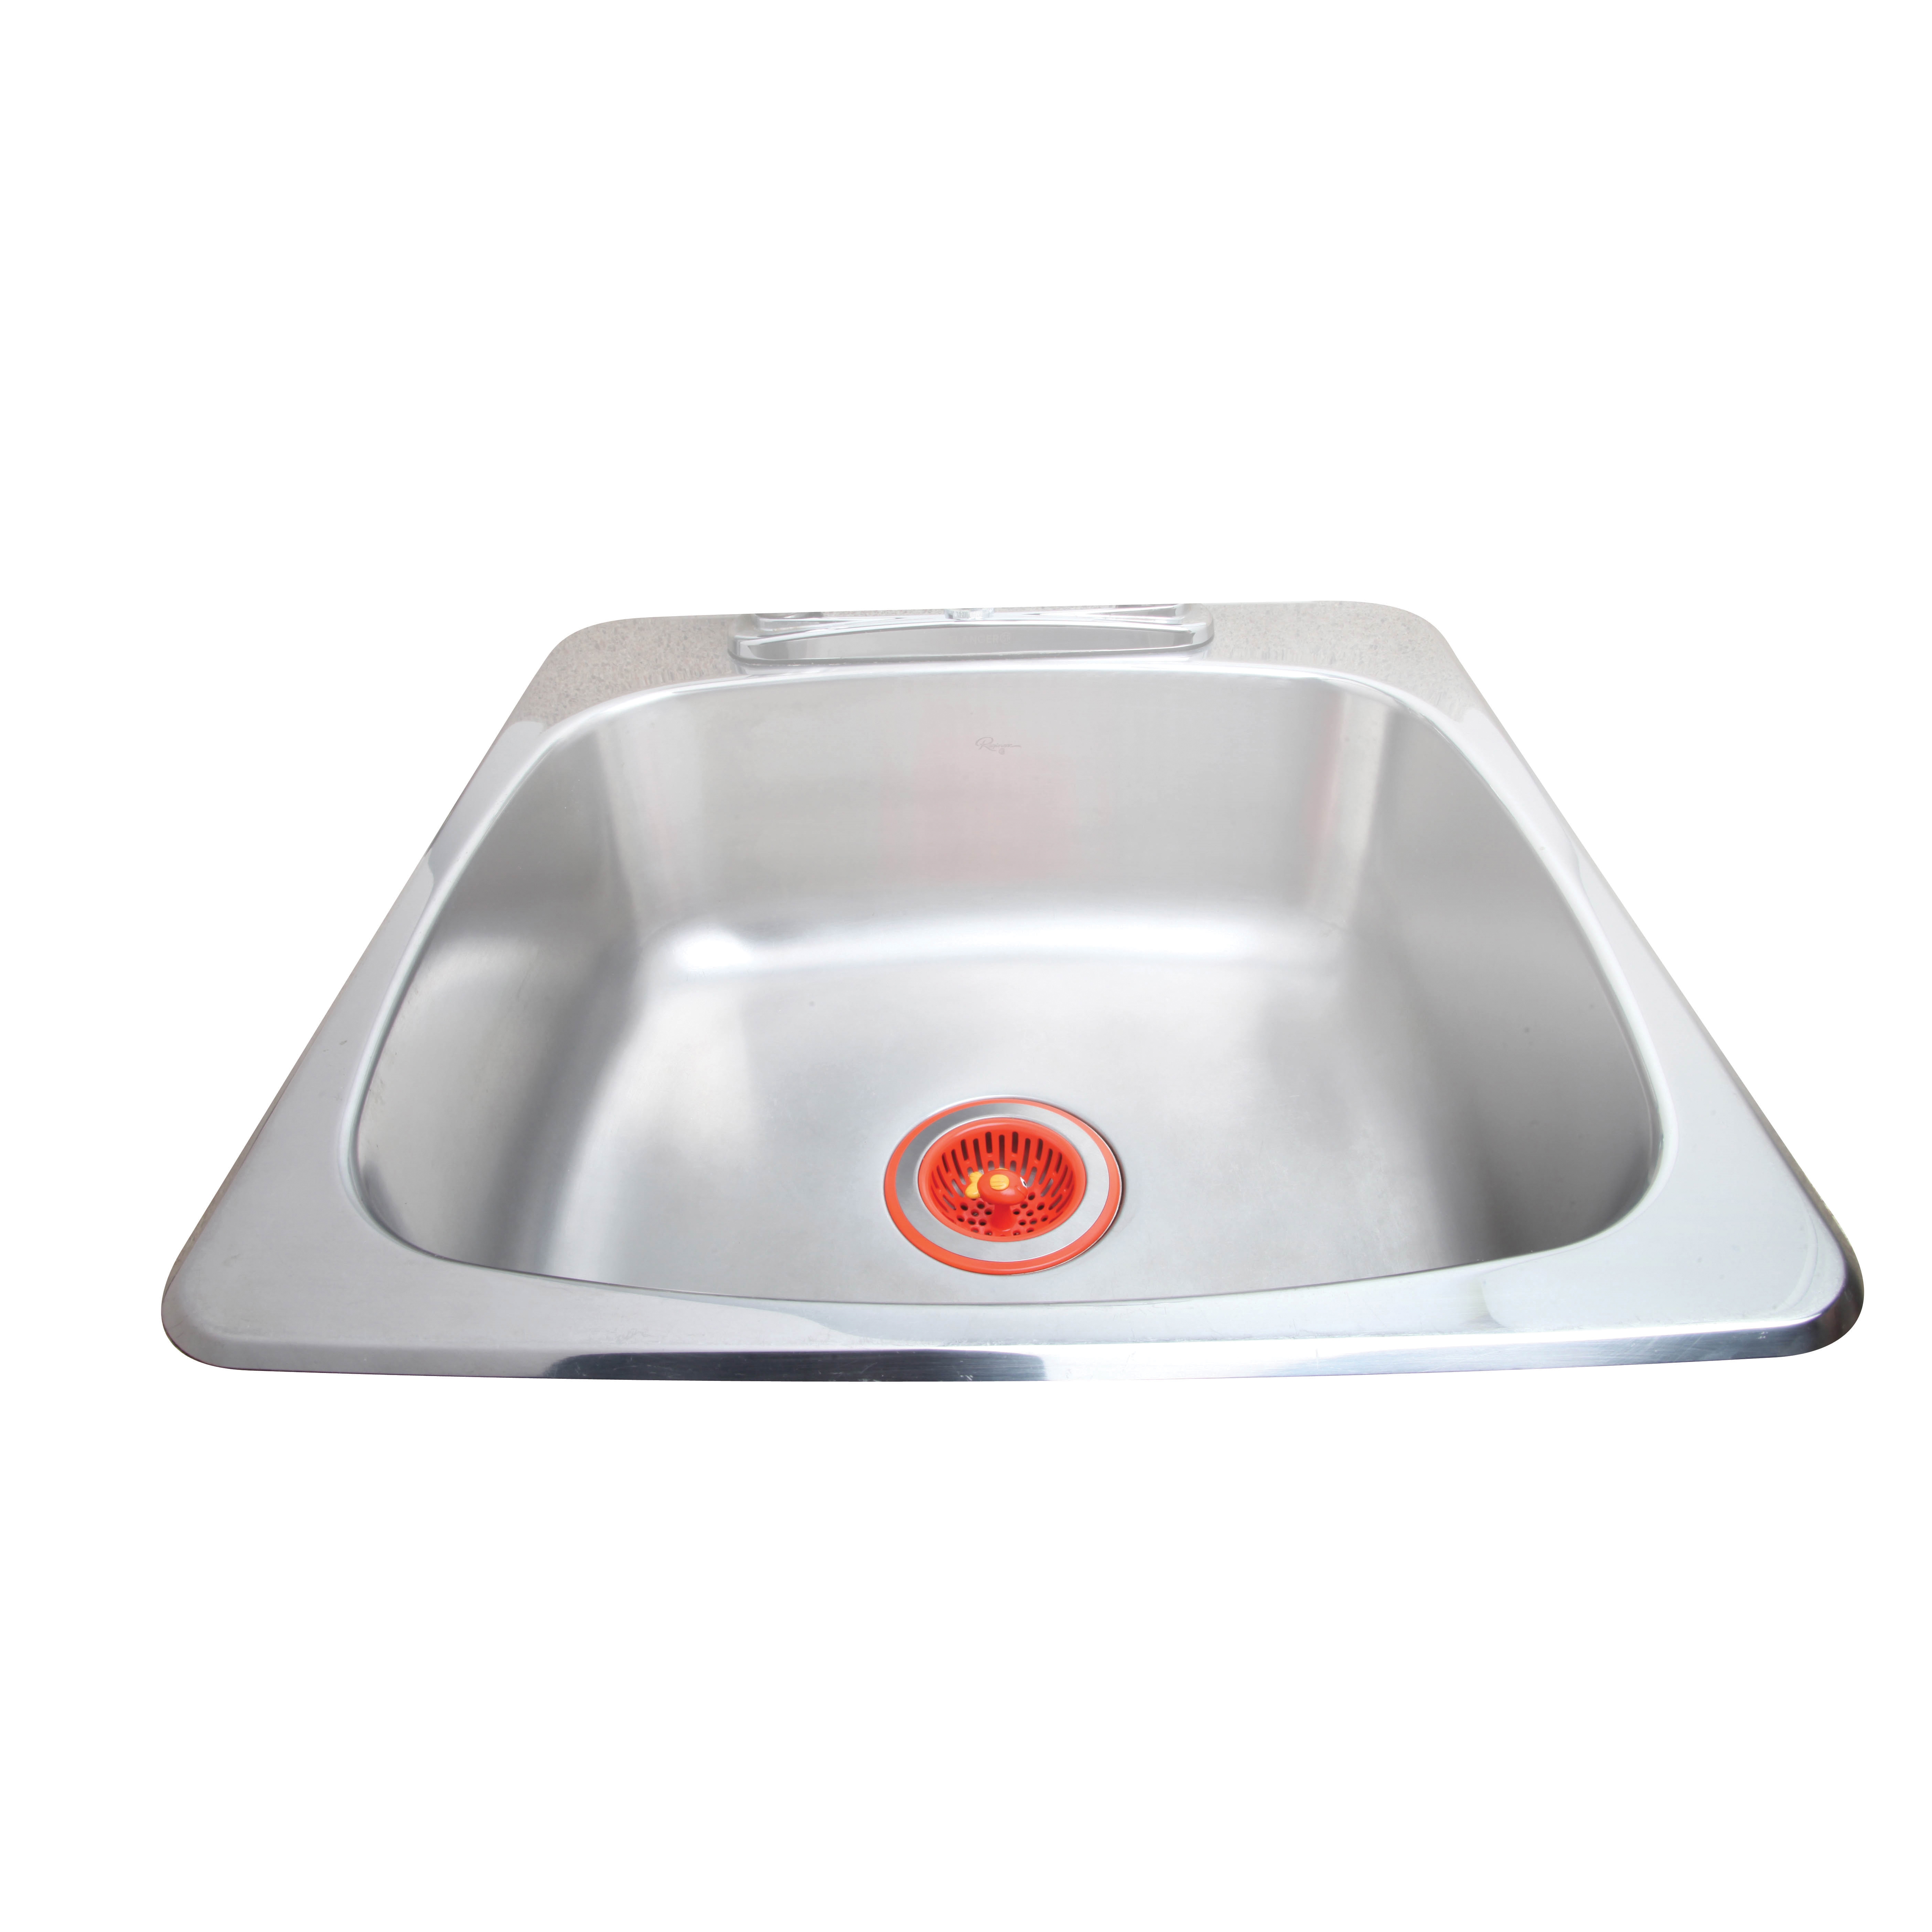 Joie Splash 77019 Sink Strainer, Plastic/Stainless Steel - 3